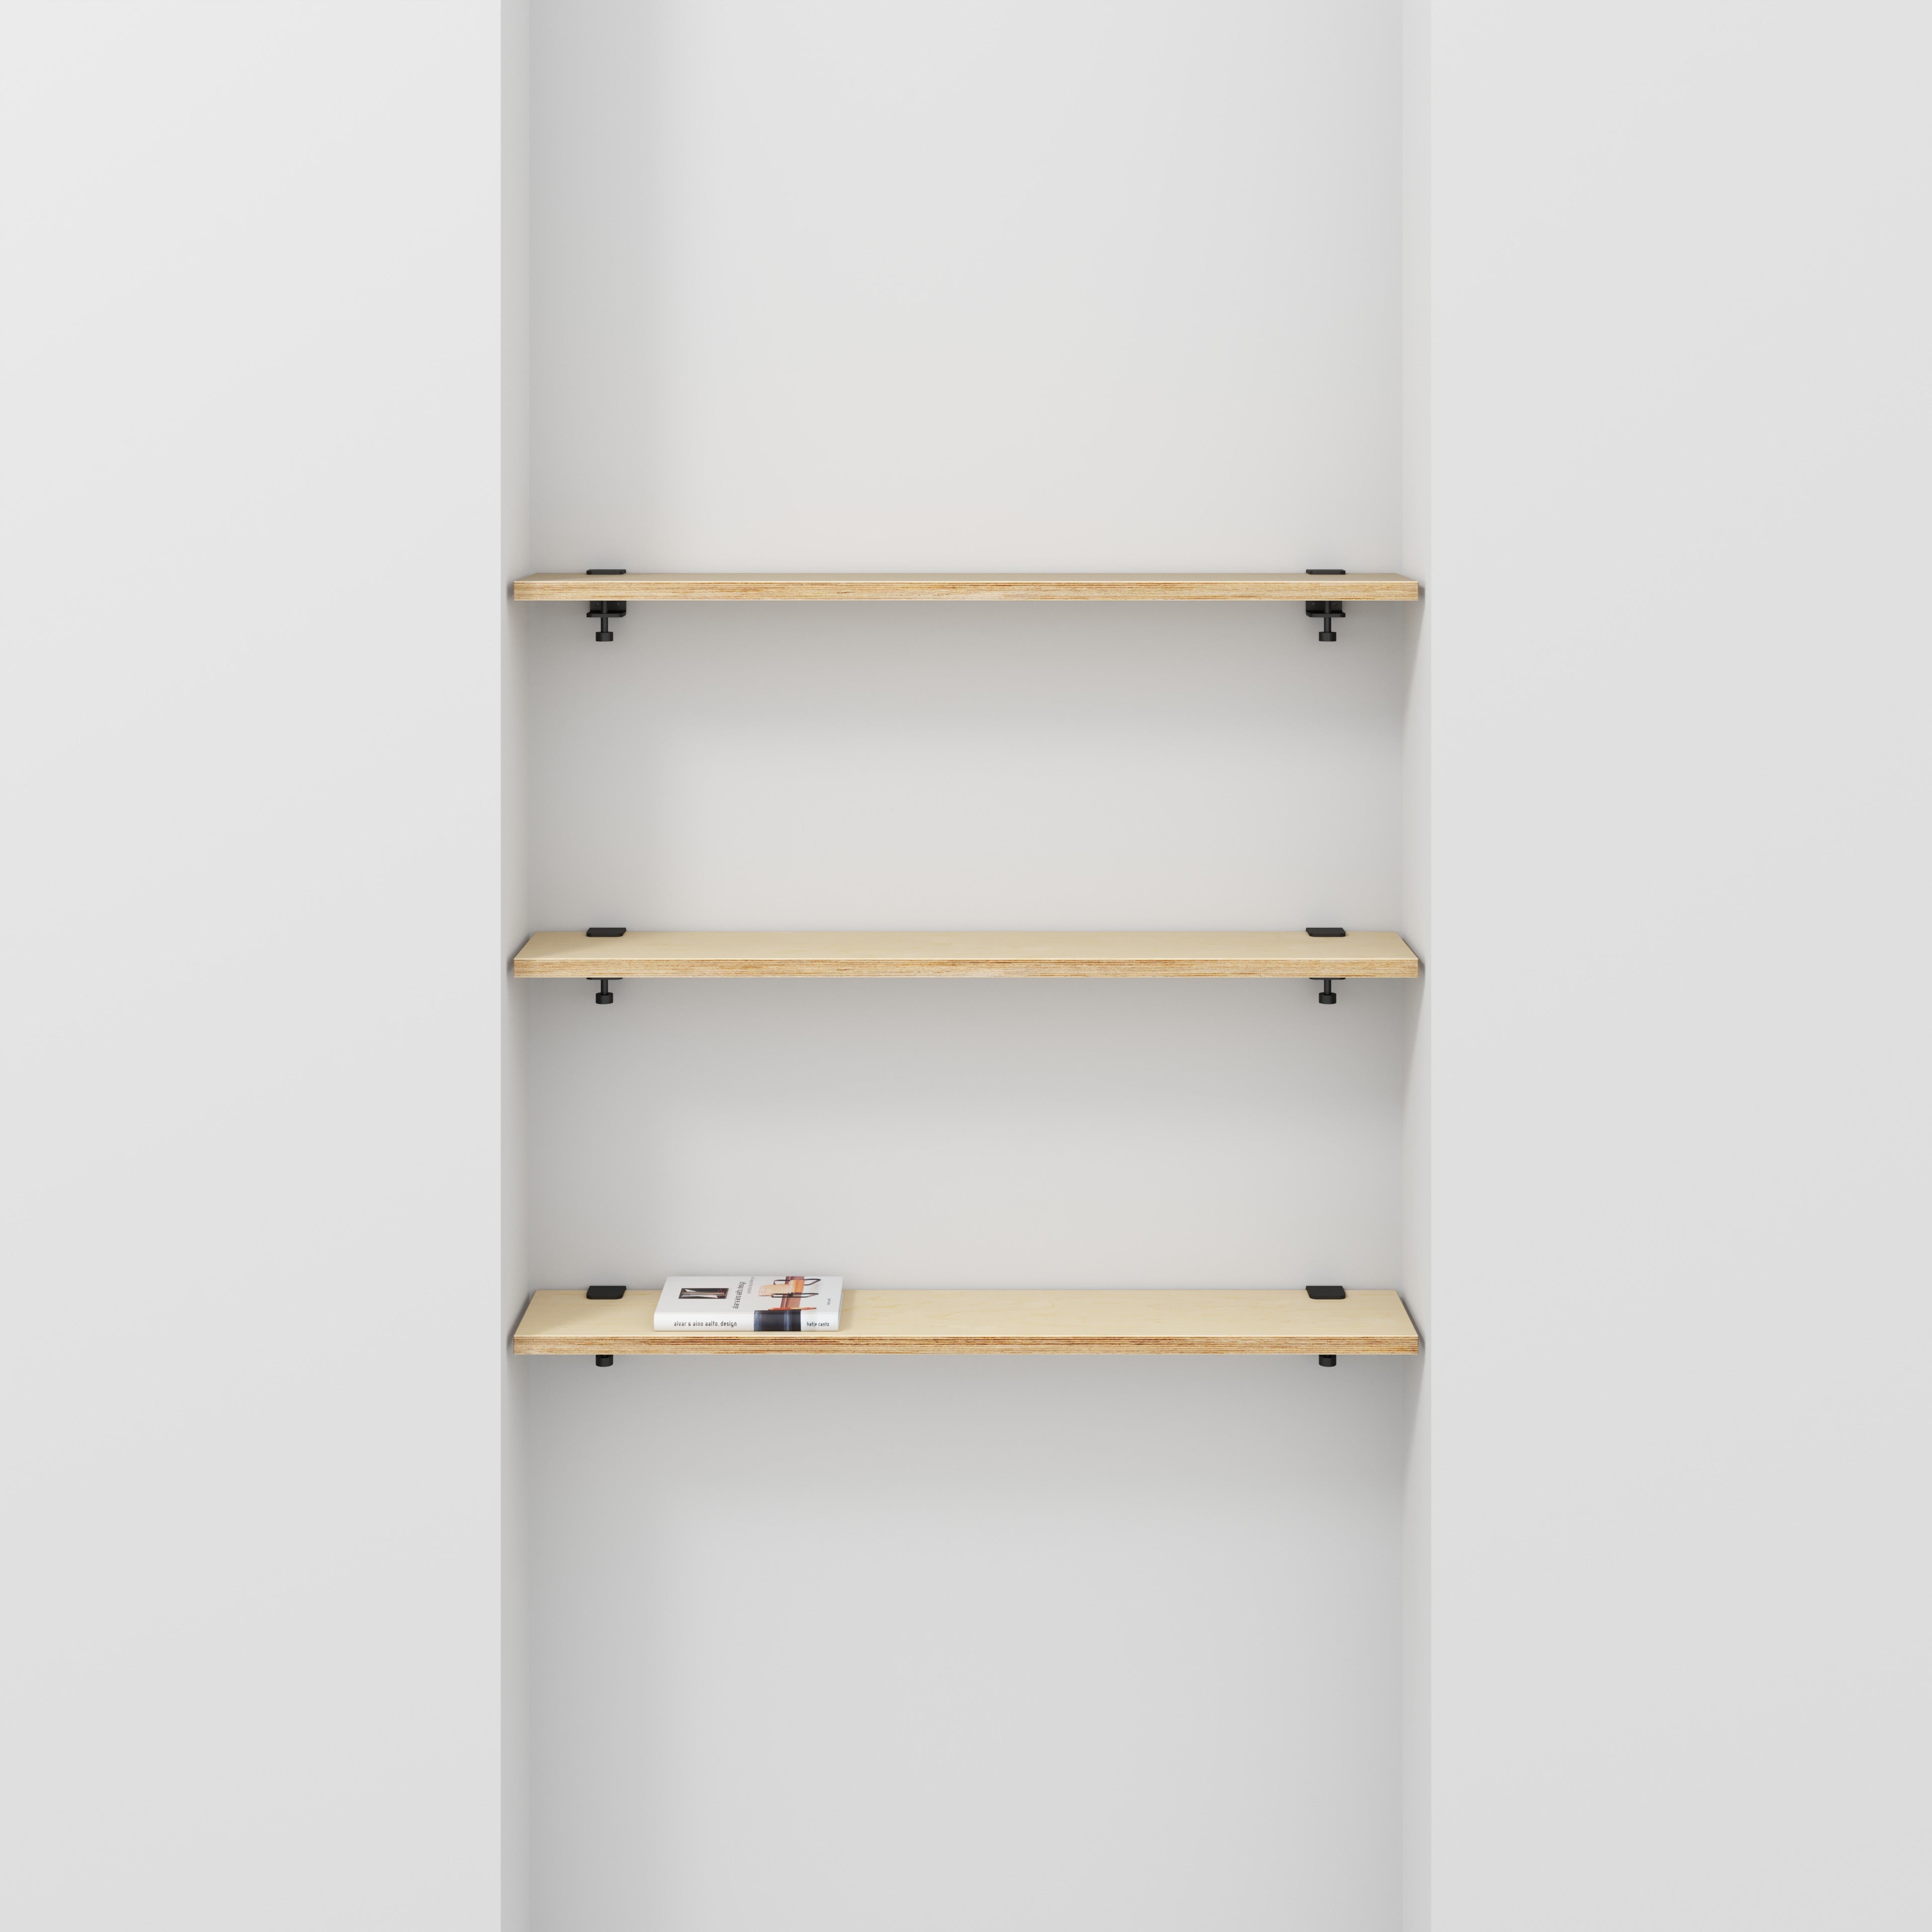 Custom Plywood Wall Shelf with Tiptoe Brackets